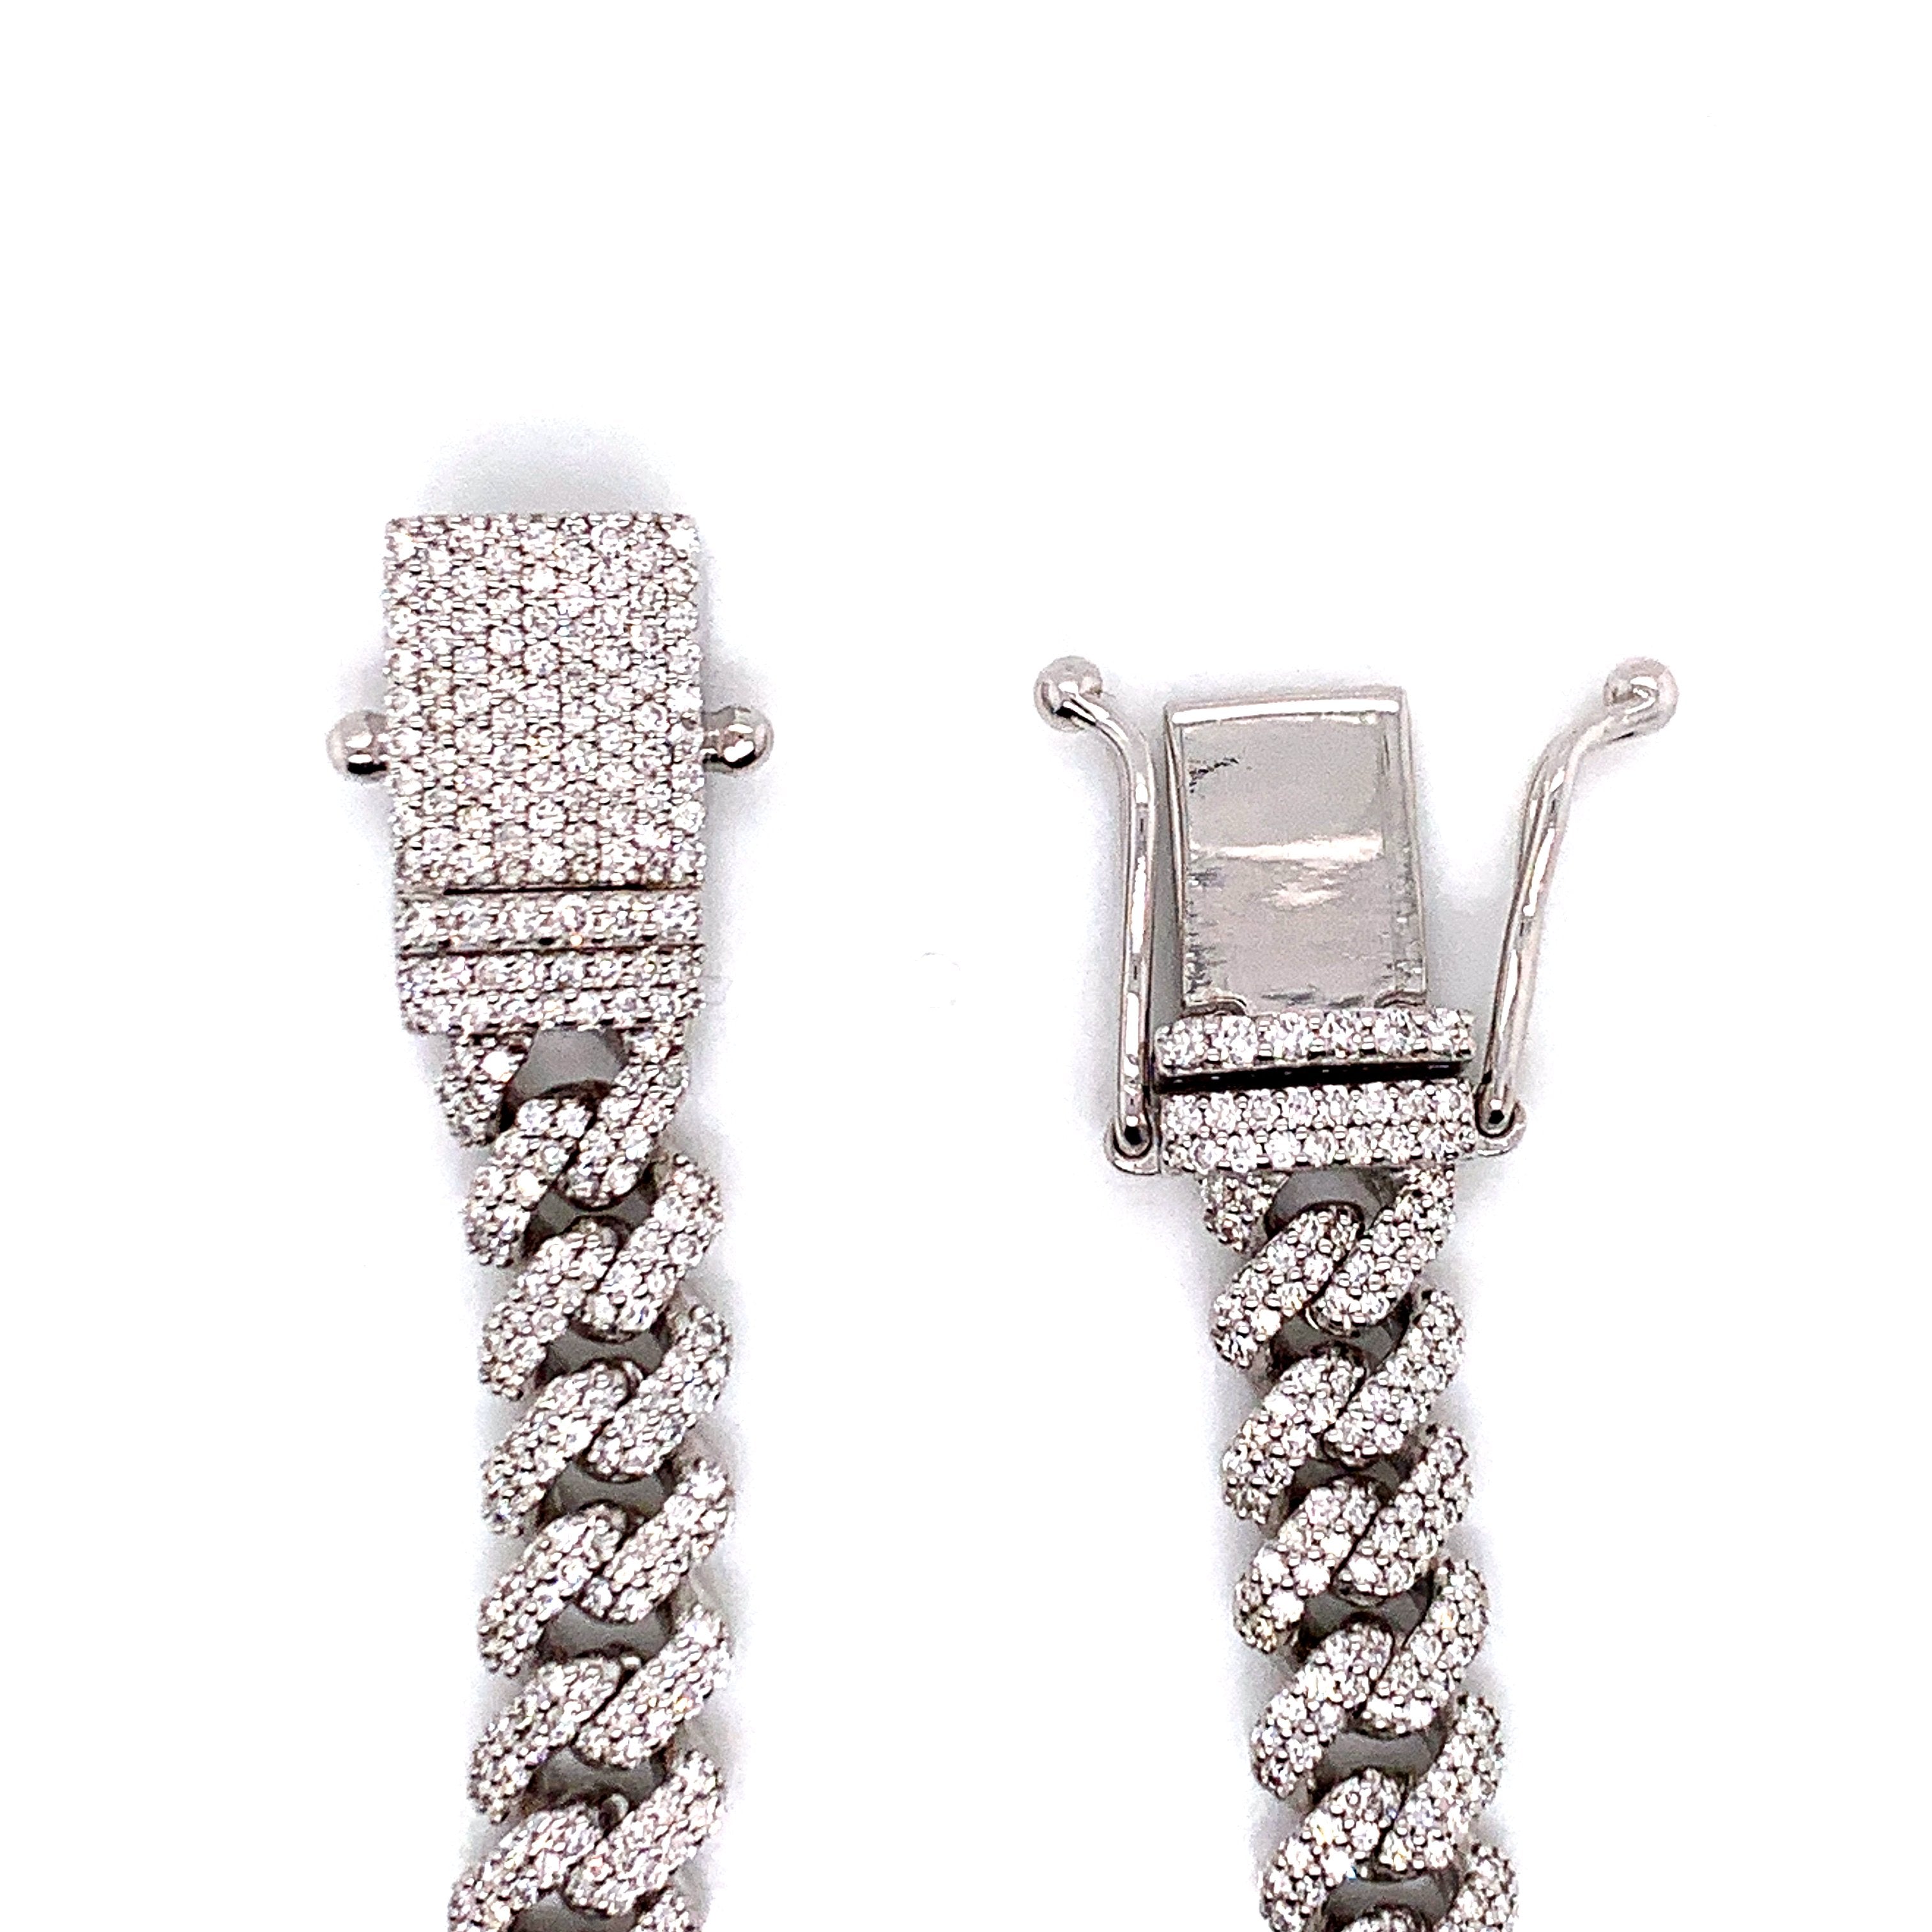 28CT. - 45.00CT. Diamond Claw Cuban Chain in 14KT Gold - 15MM - White Carat Diamonds 